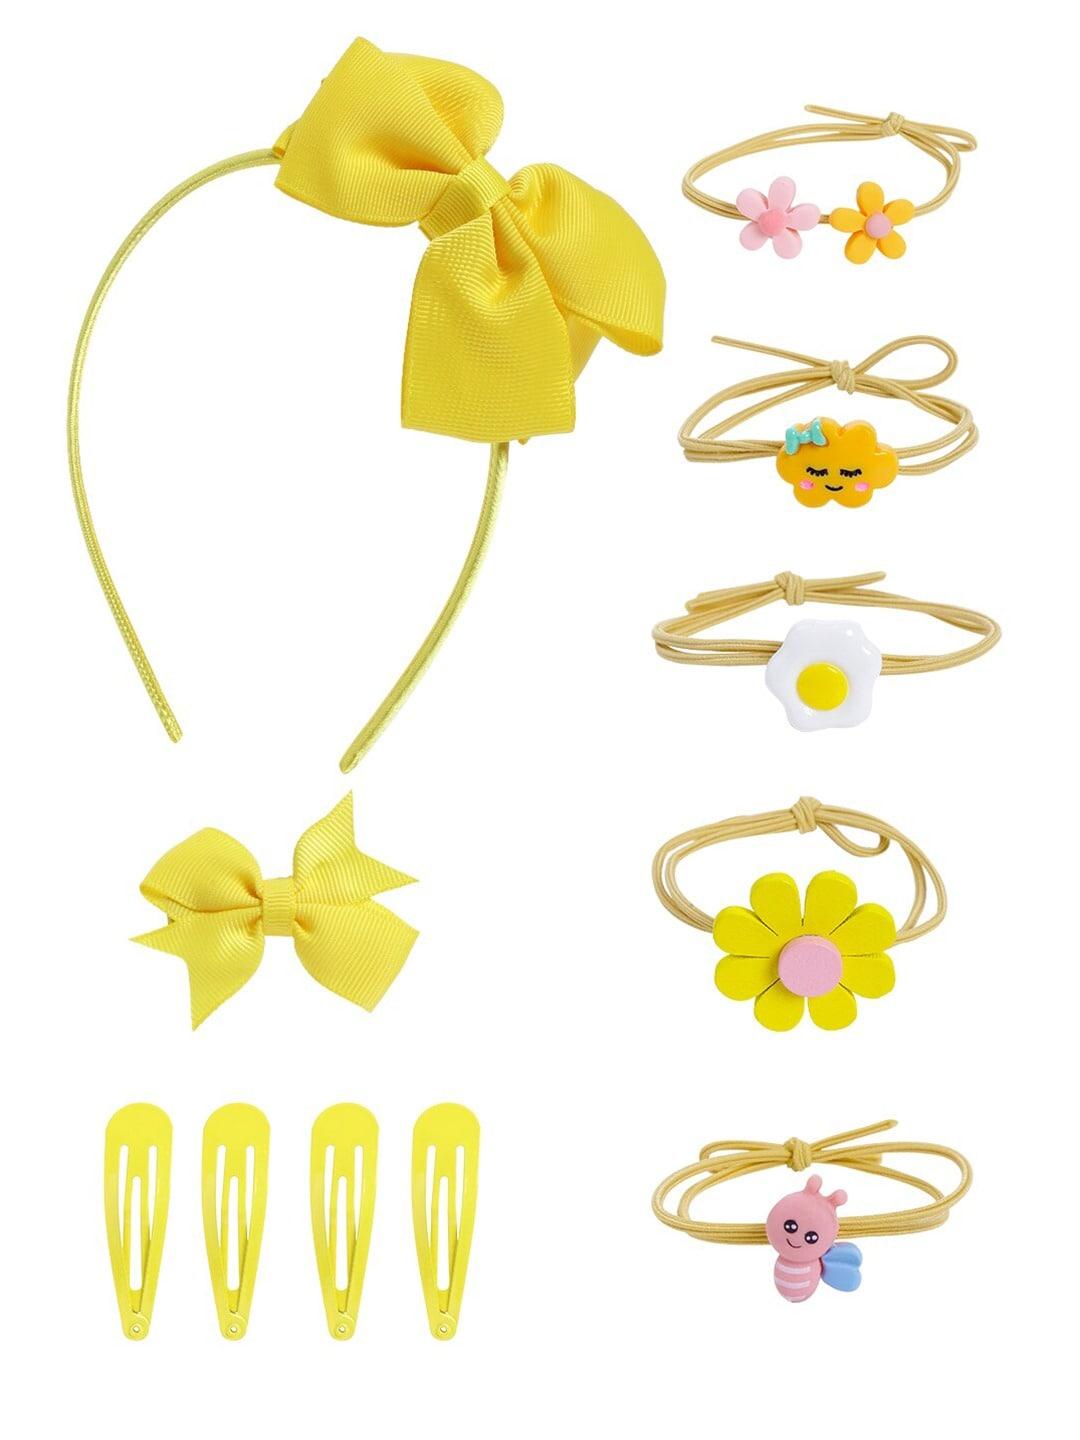 yellow chimes girls set of 11 yellow & white lace hair accessory set